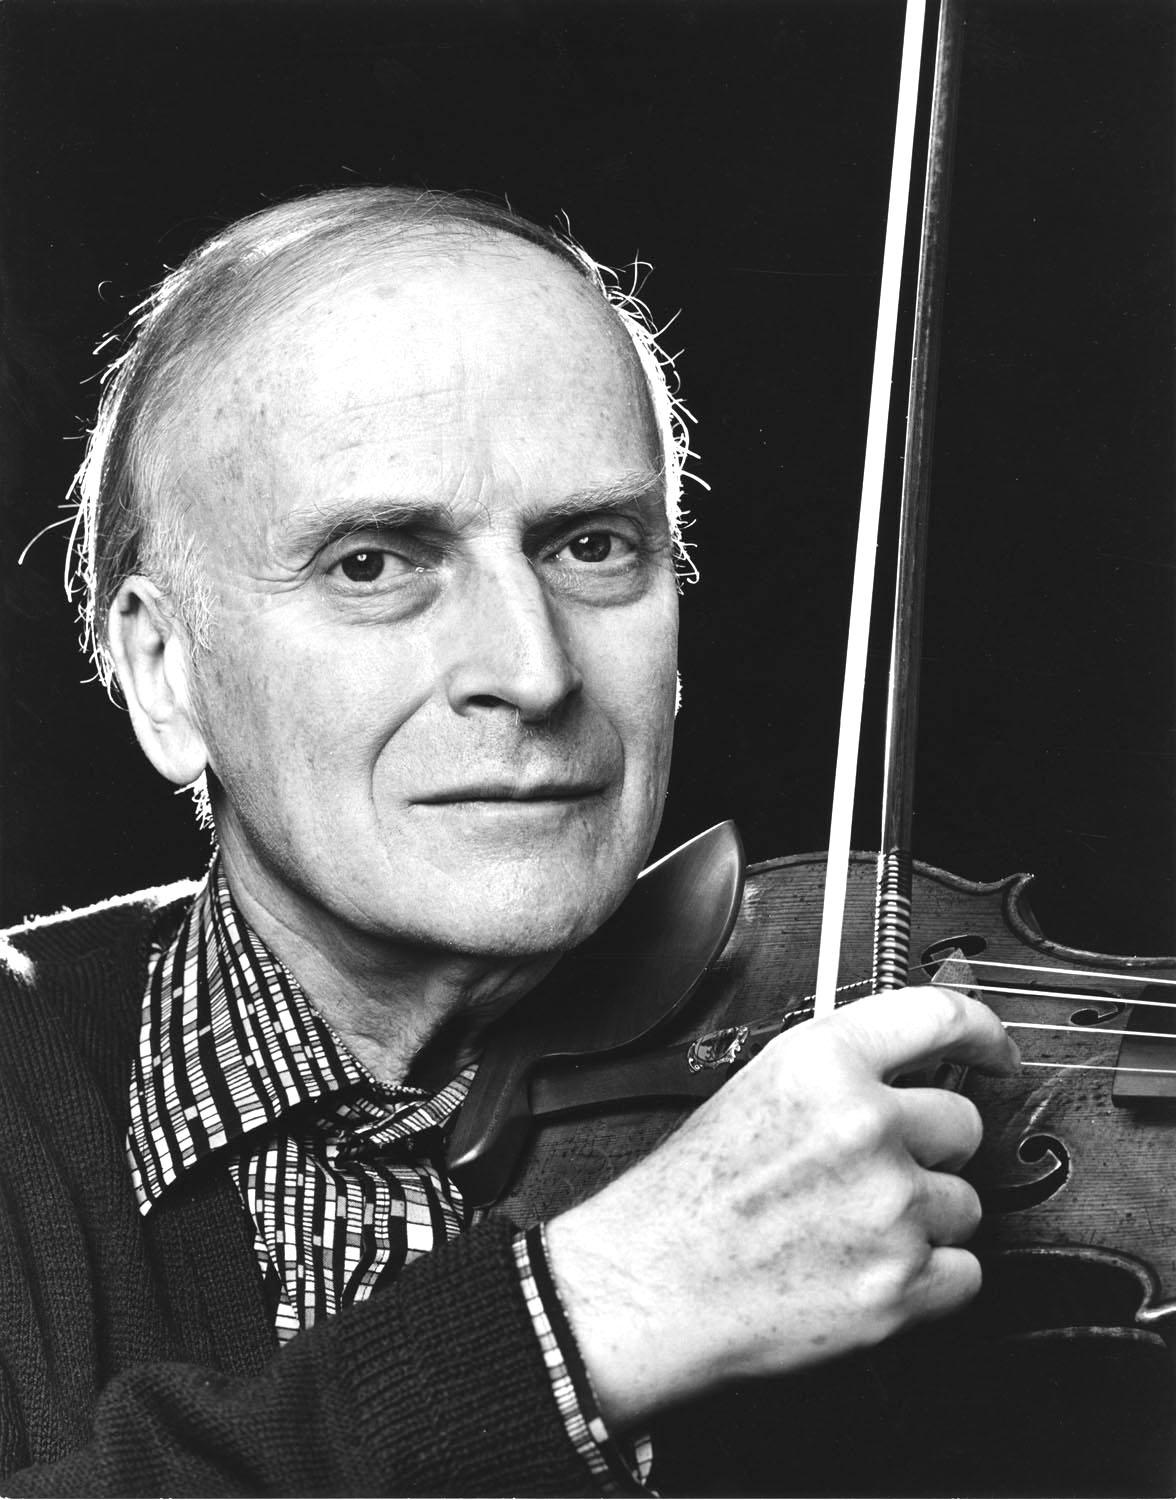 Jack Mitchell Black and White Photograph - American classical violinist Yehudi Menuhin 